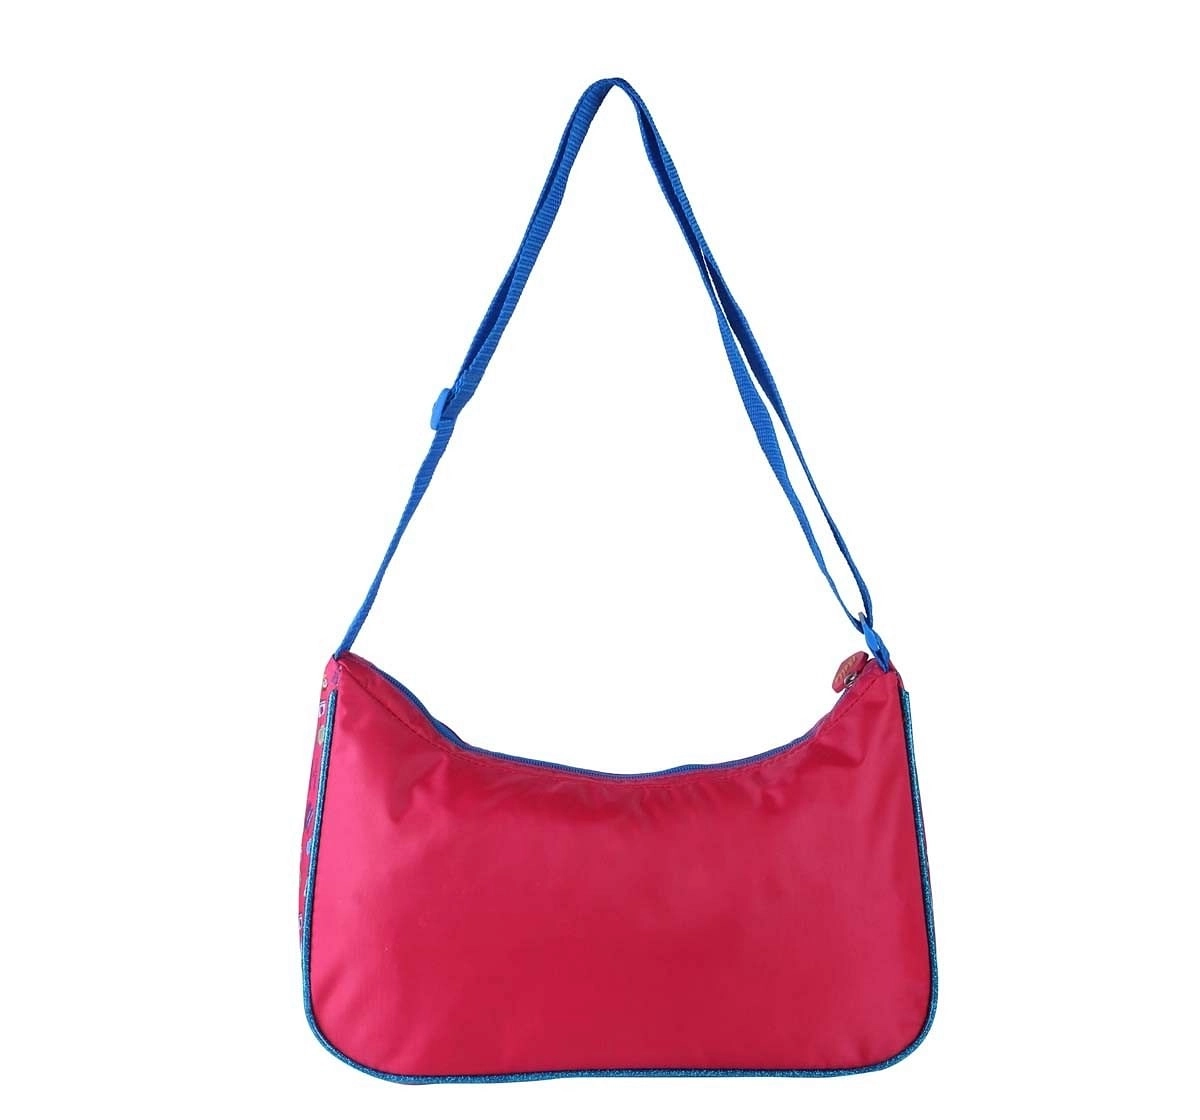 Disney Princess - Light Pink Fashion Handbag for age 3Y+ 